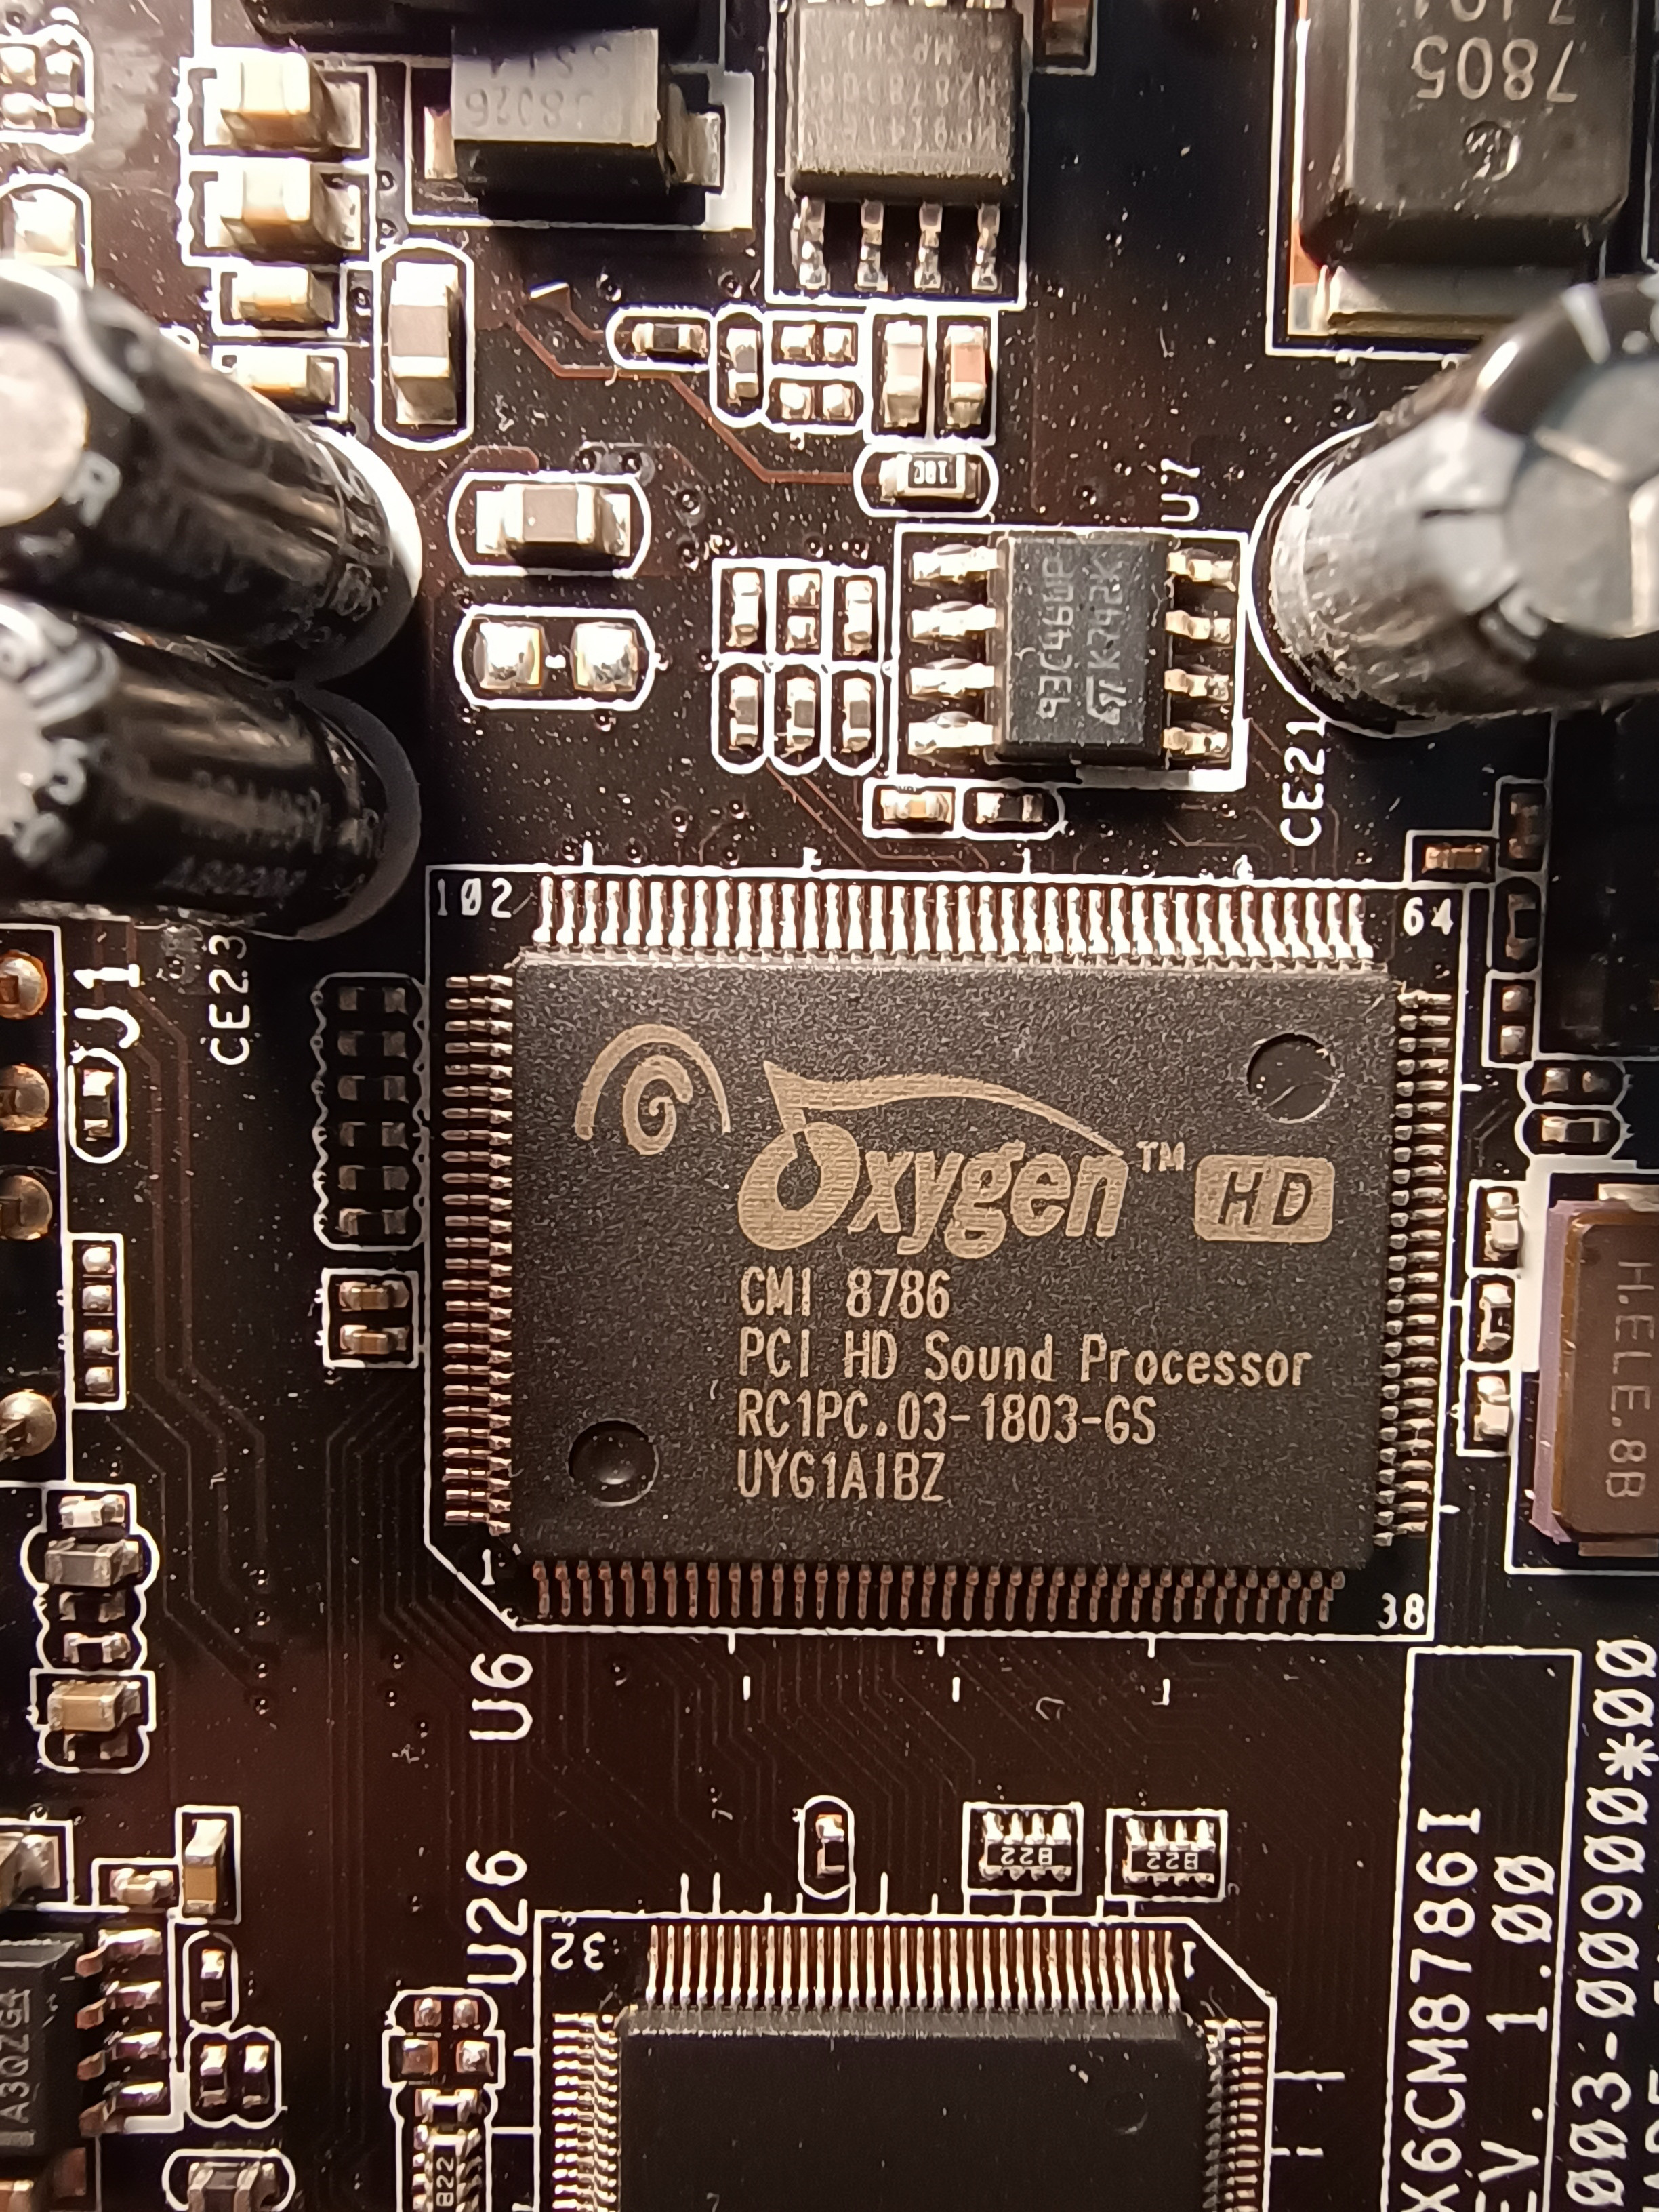 Procesor karty dźwiękowej Asus Xonar DGX